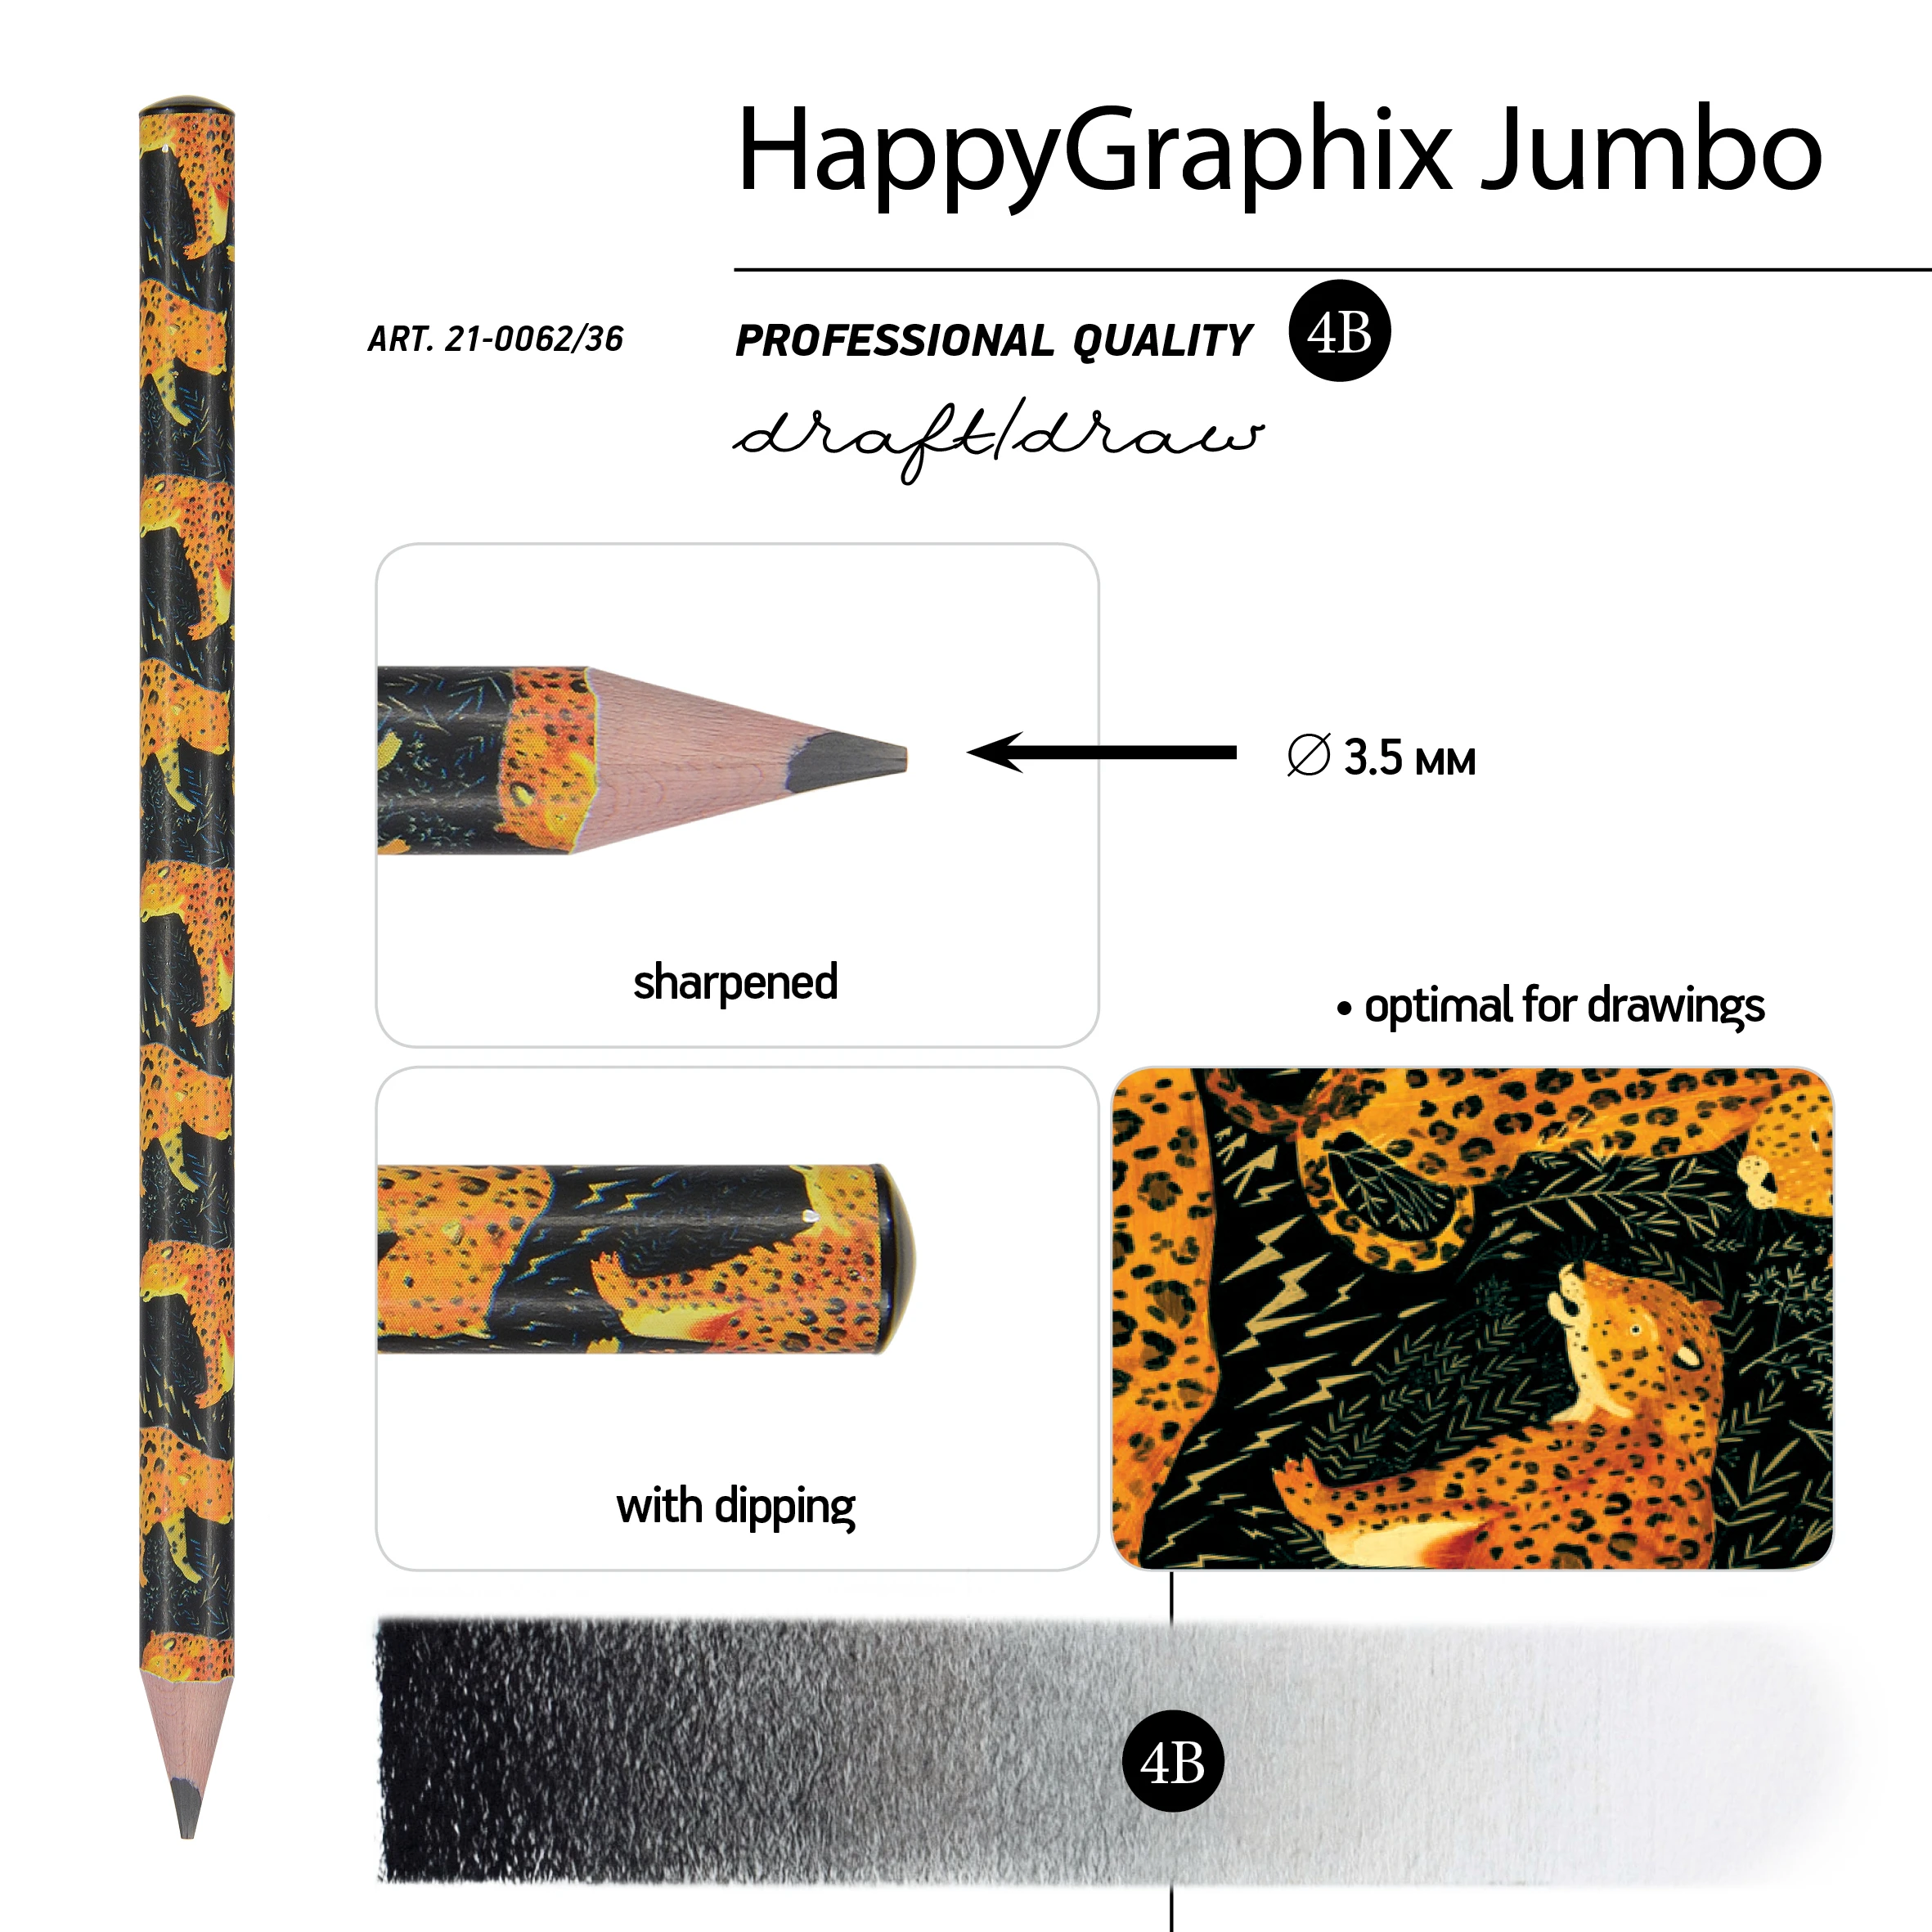 КАРАНДАШ ЧЕРНОГРАФИТОВЫЙ "HappyGraphix Jumbo. Леопард" 4В, 3.5 MM